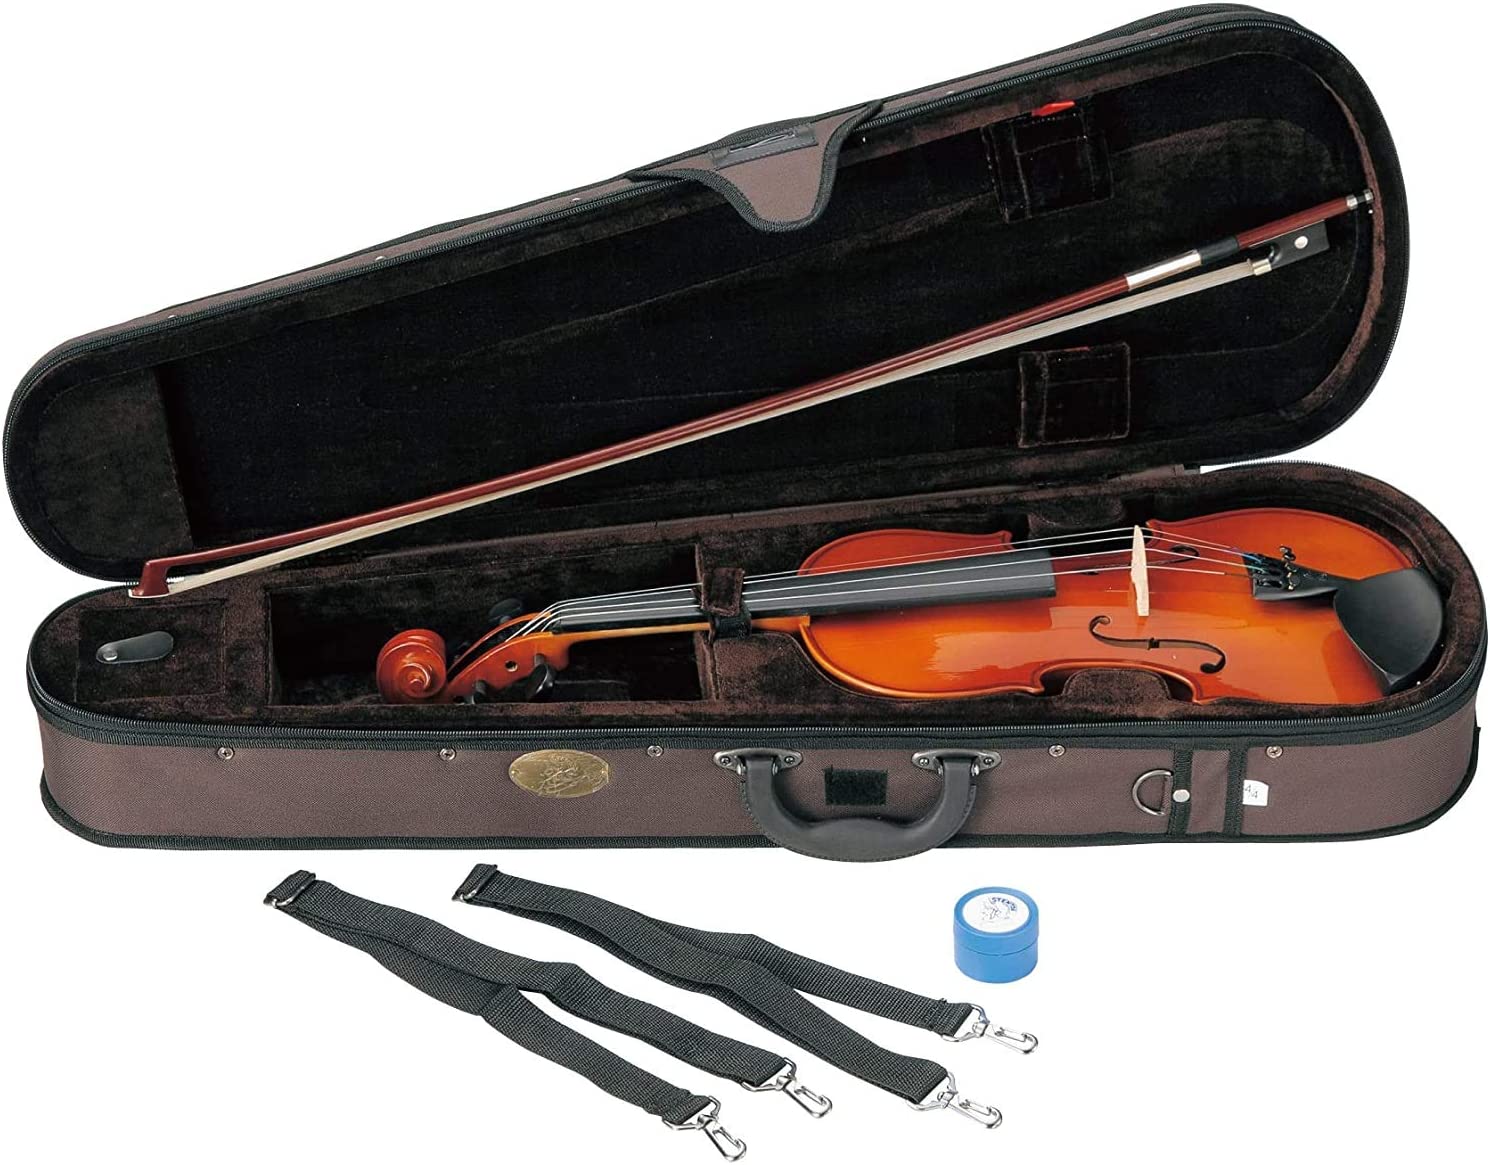 ویولن استنتور Stentor Student Standard Violin Outfit 4/4 Size - ارسال 35 الی 40 روز کاری